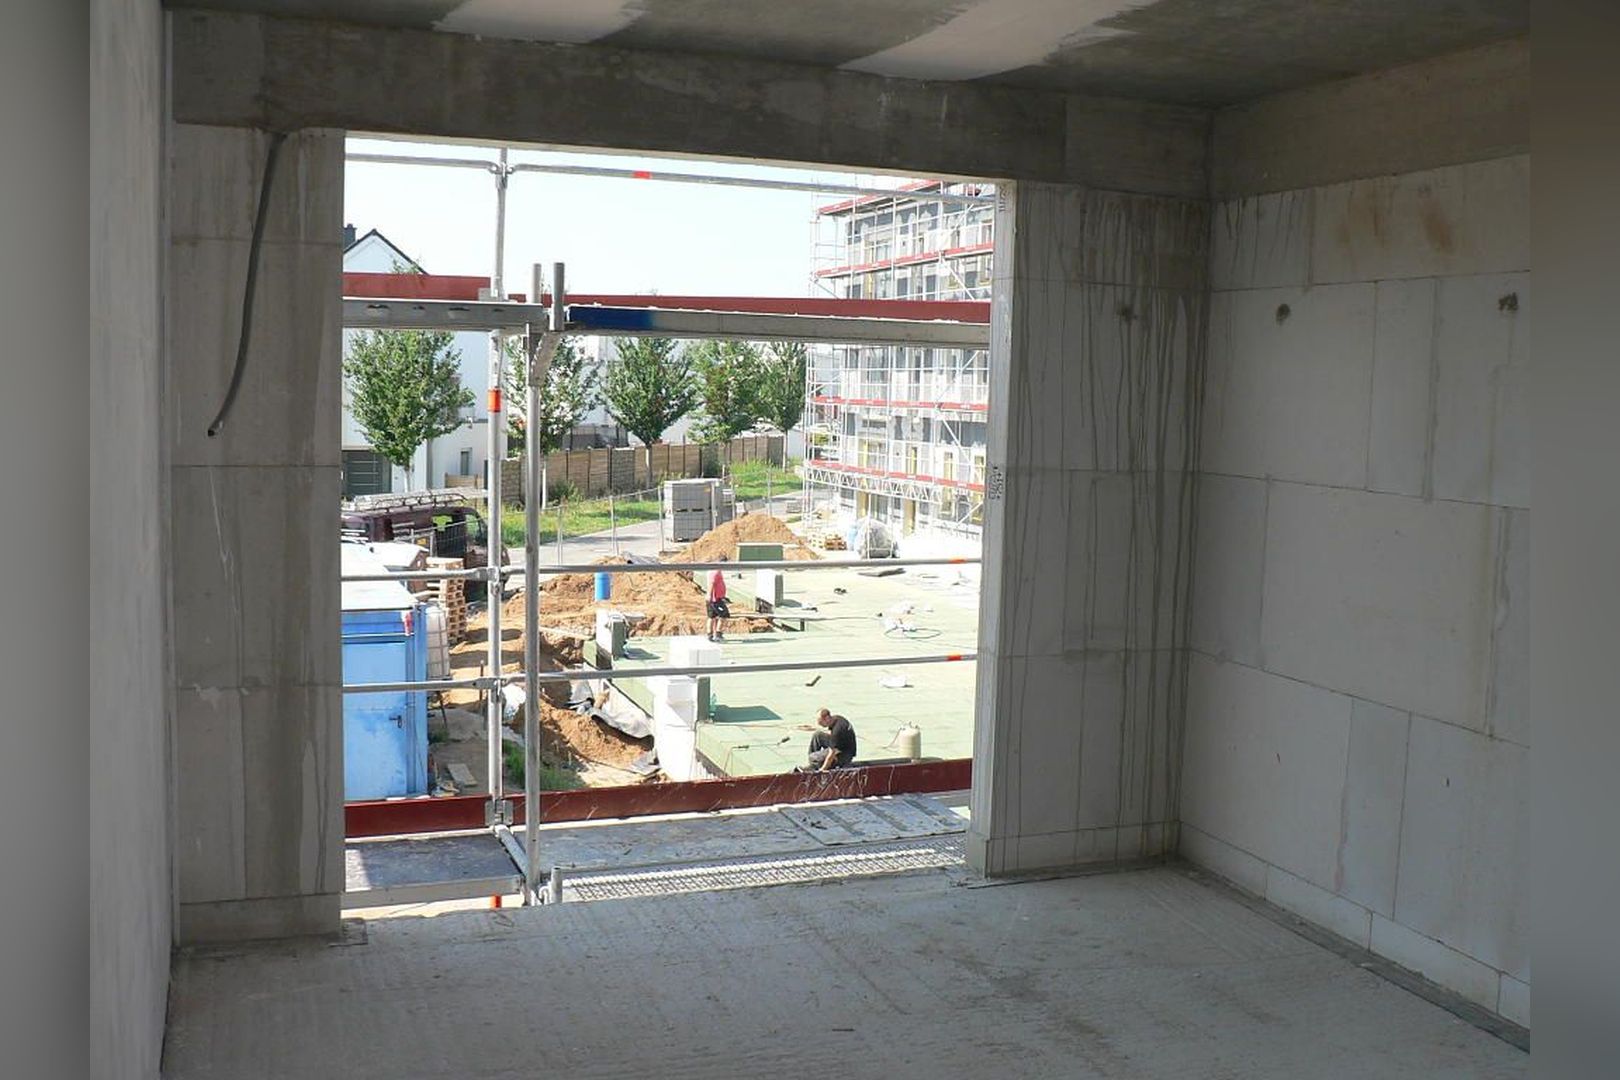 Immobilie Nr.Köln 007.4 - 4-Raum-Maisonette-Wohnung über OG u. DG (Staffelgeschoss ohne Schrägen) - Bild 6.jpg